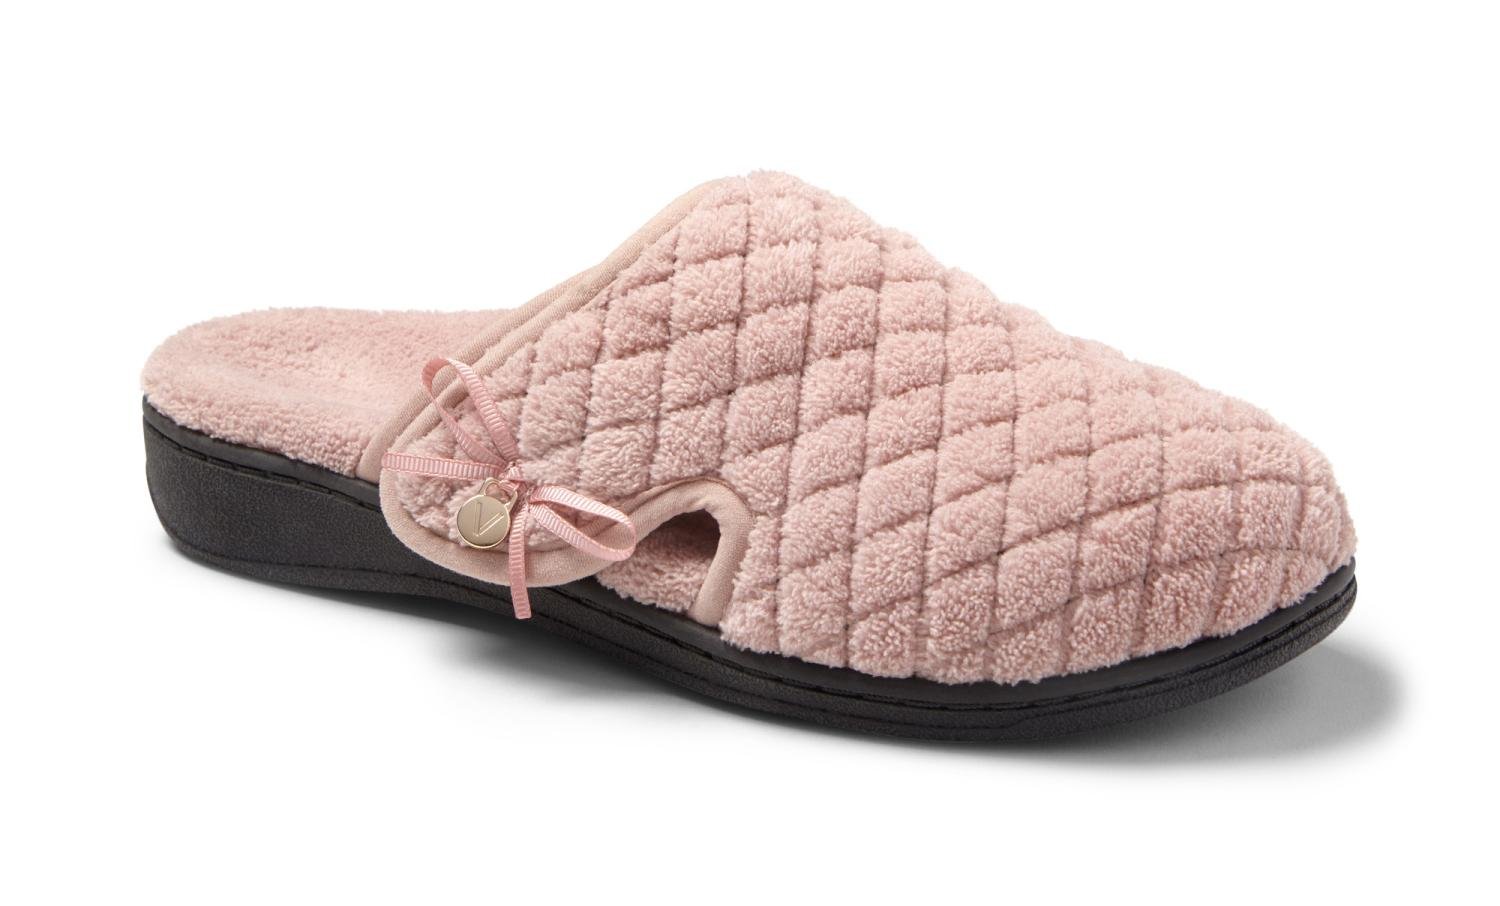 vionic pleasant slippers